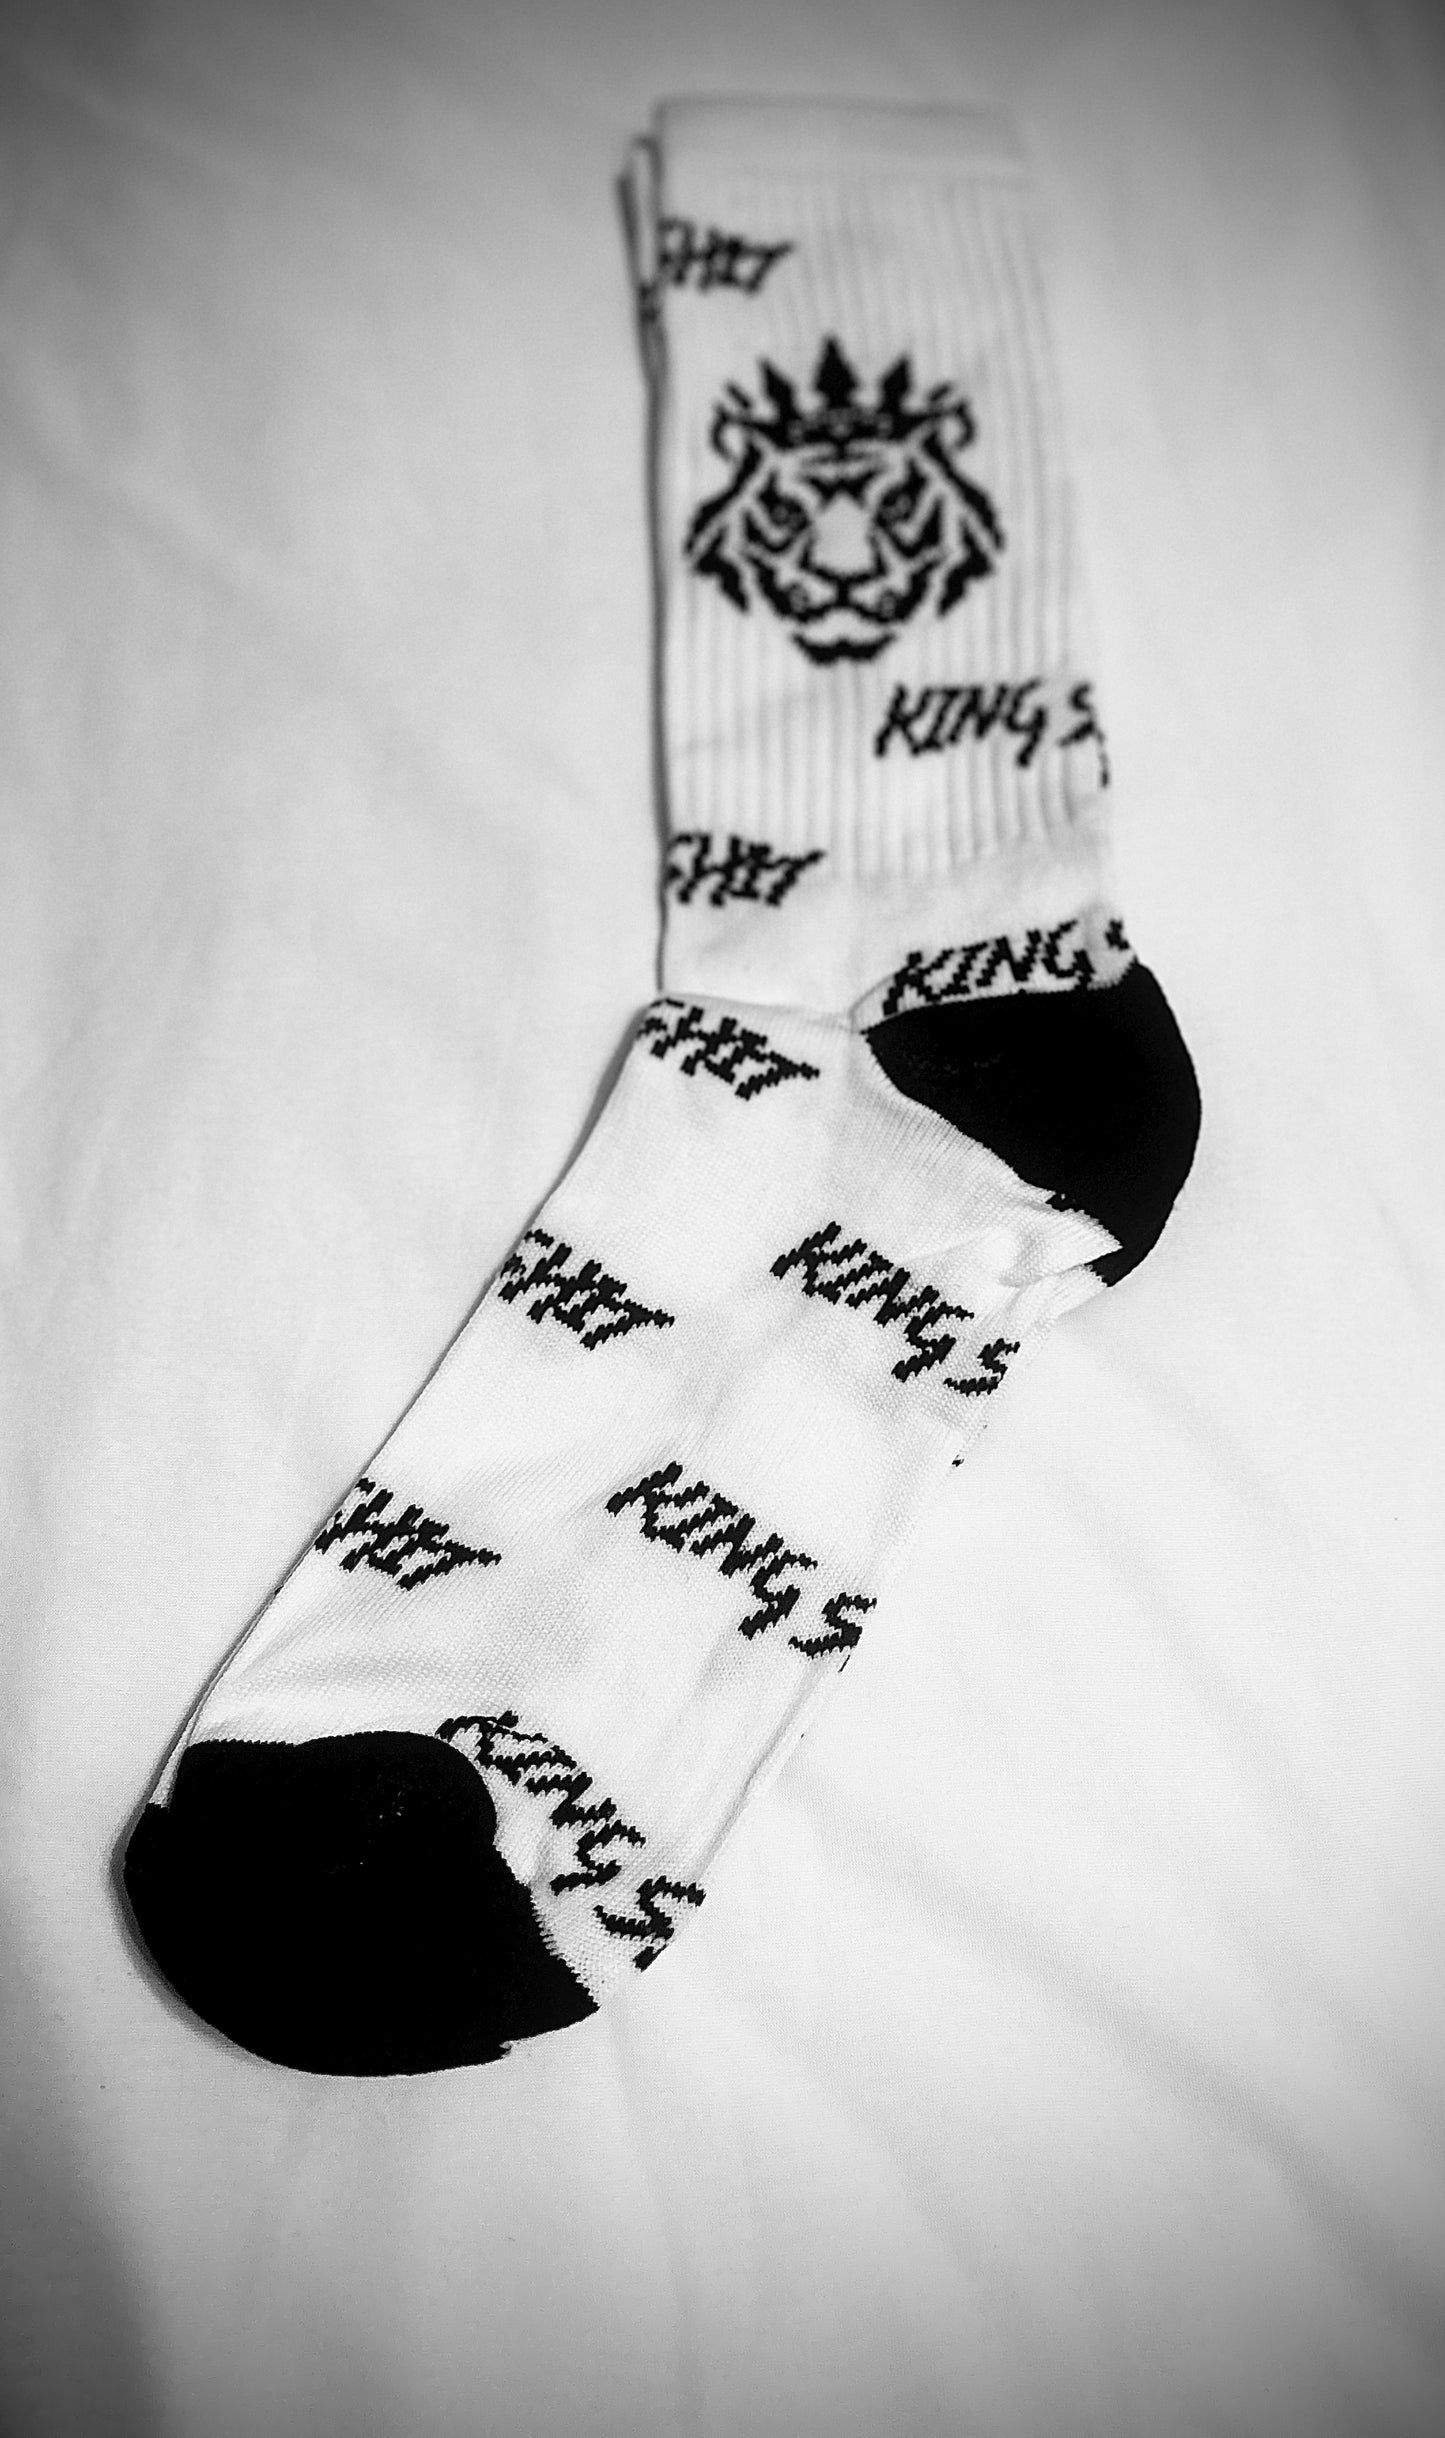 King Sh!T socks